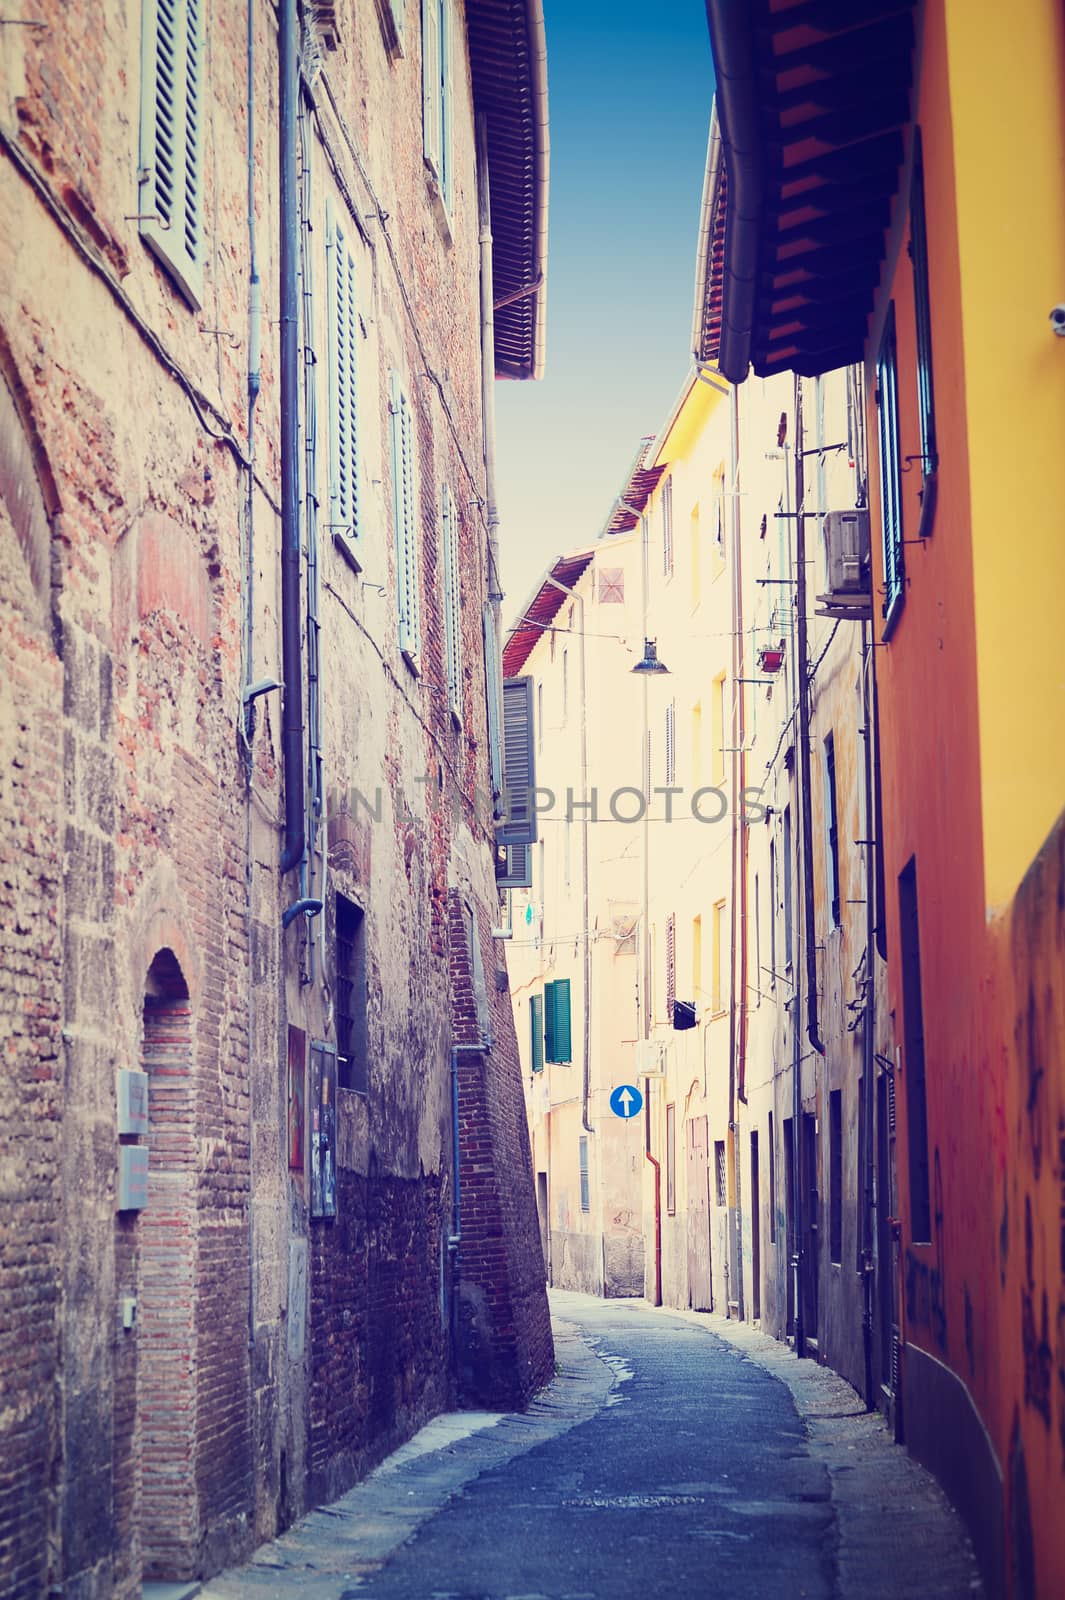 Narrow Alley  in Italian City of Pisa, Instagram Effect